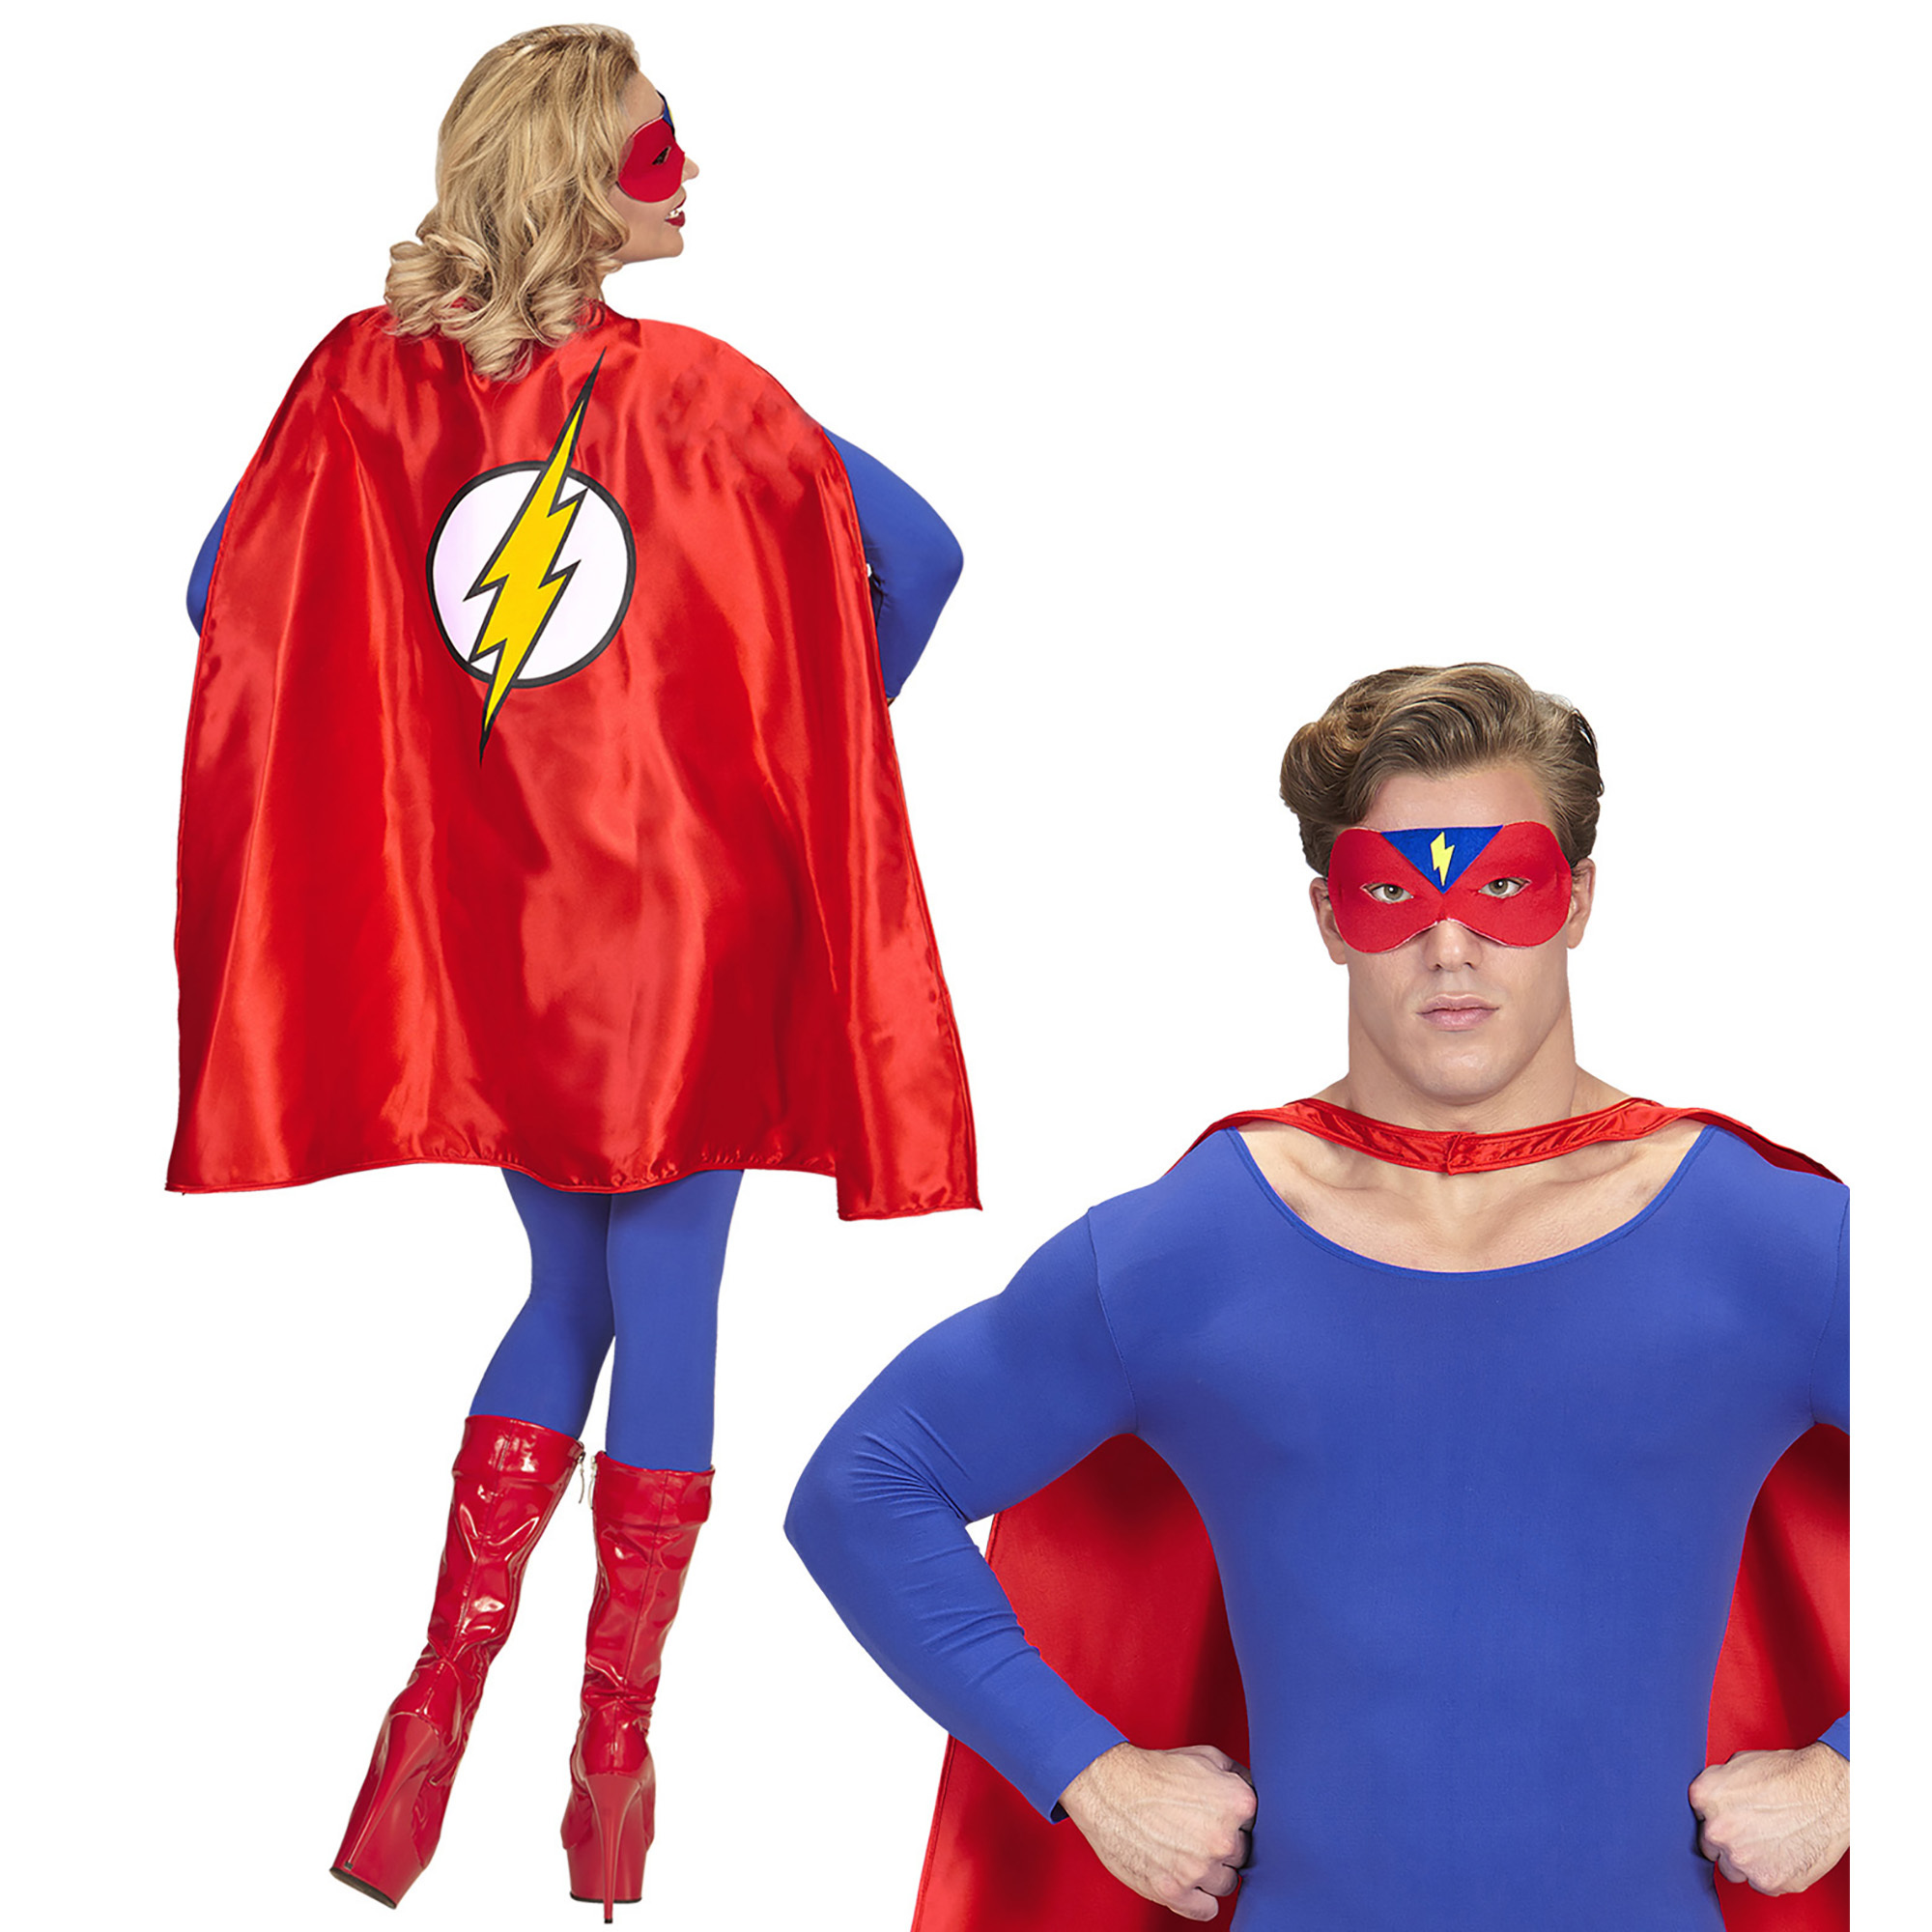 Rode superheld cape met oogmasker volwassen super hero outfit